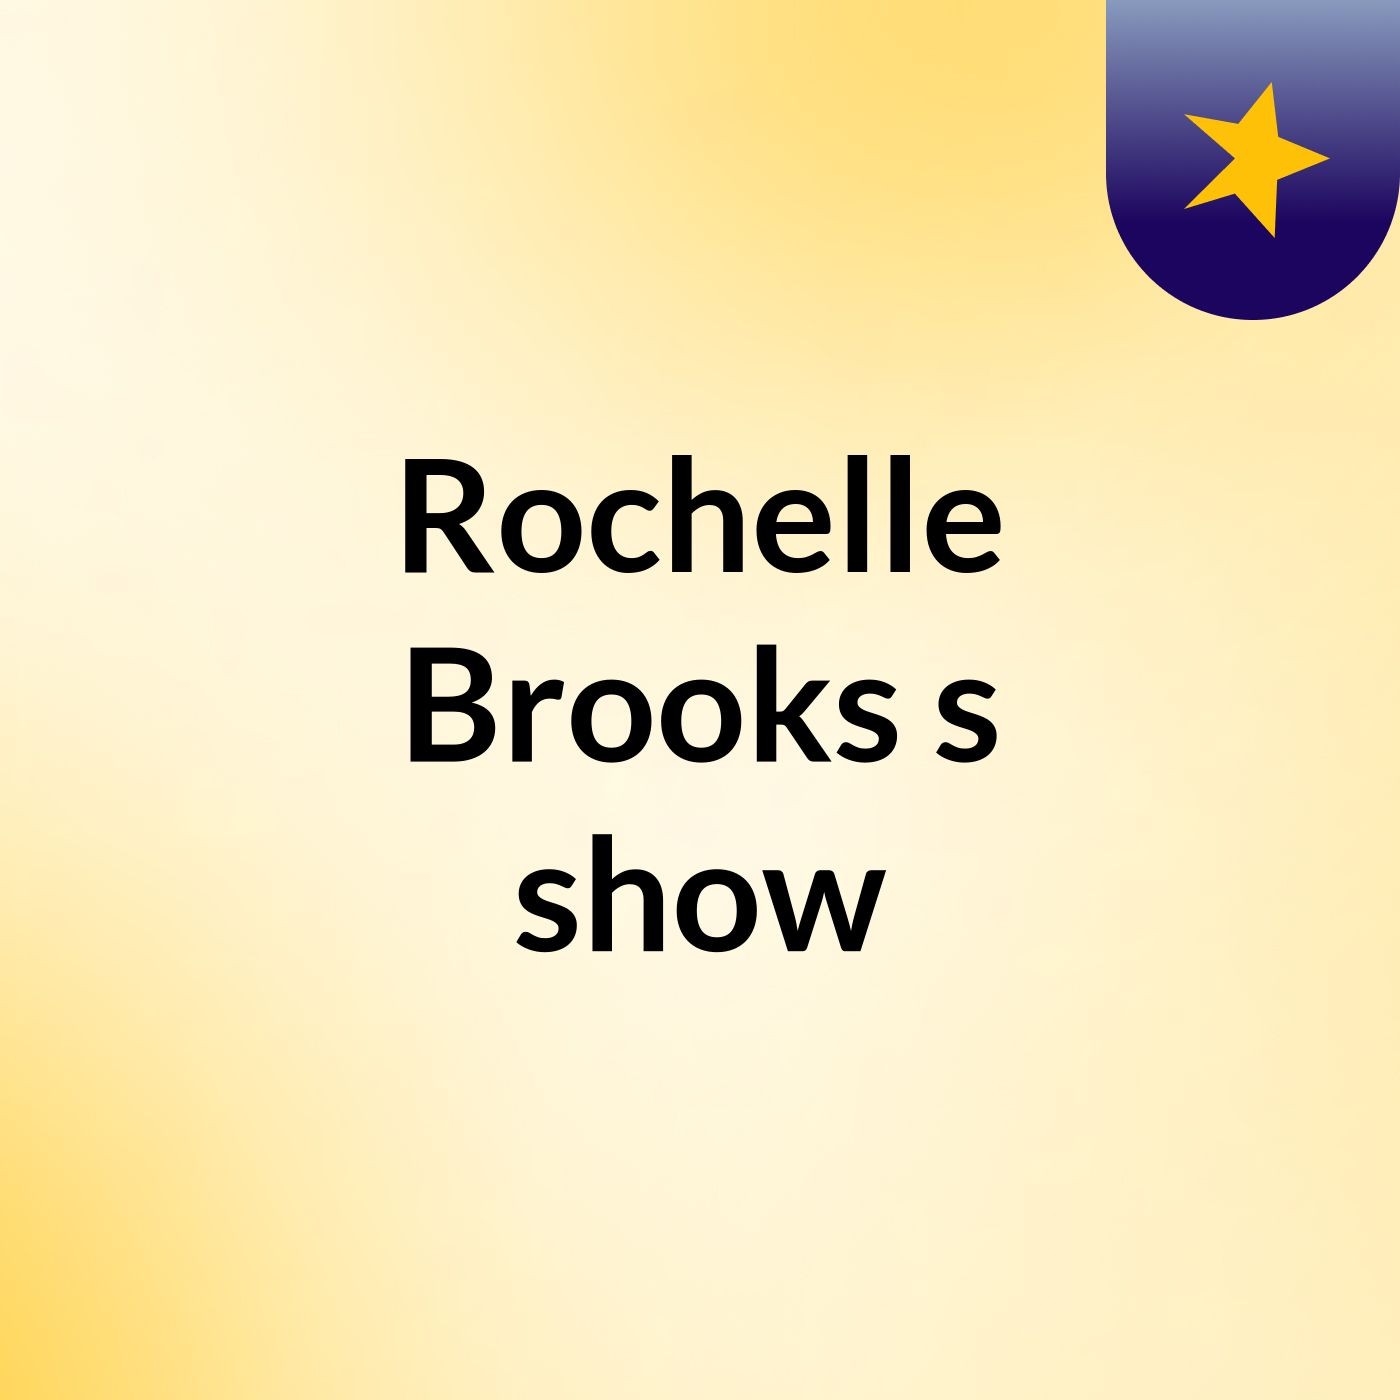 Episode 3 - Rochelle Brooks's show